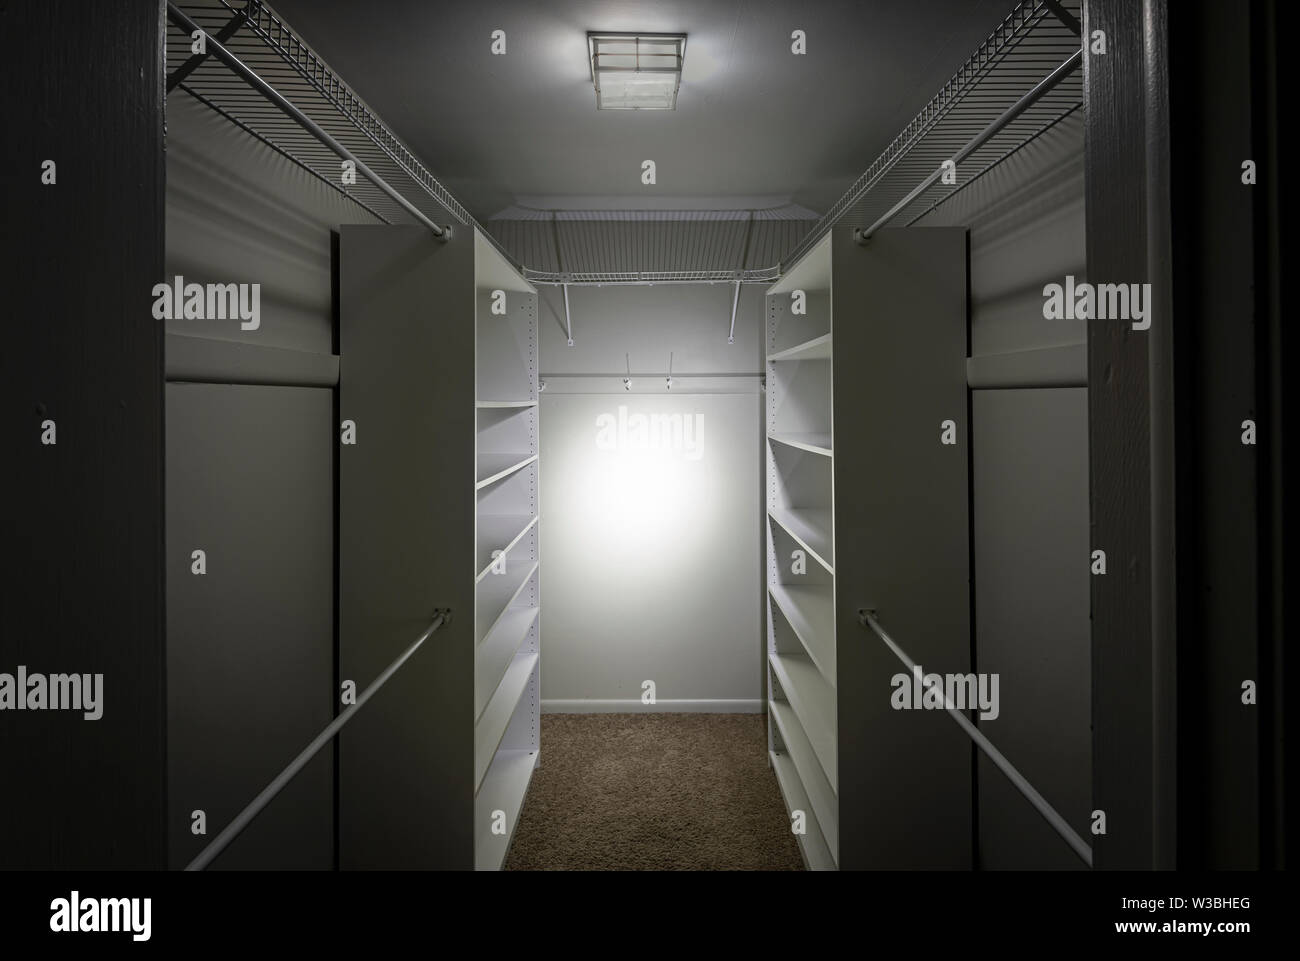 Empty Closet With Glowing Light Stock Photo